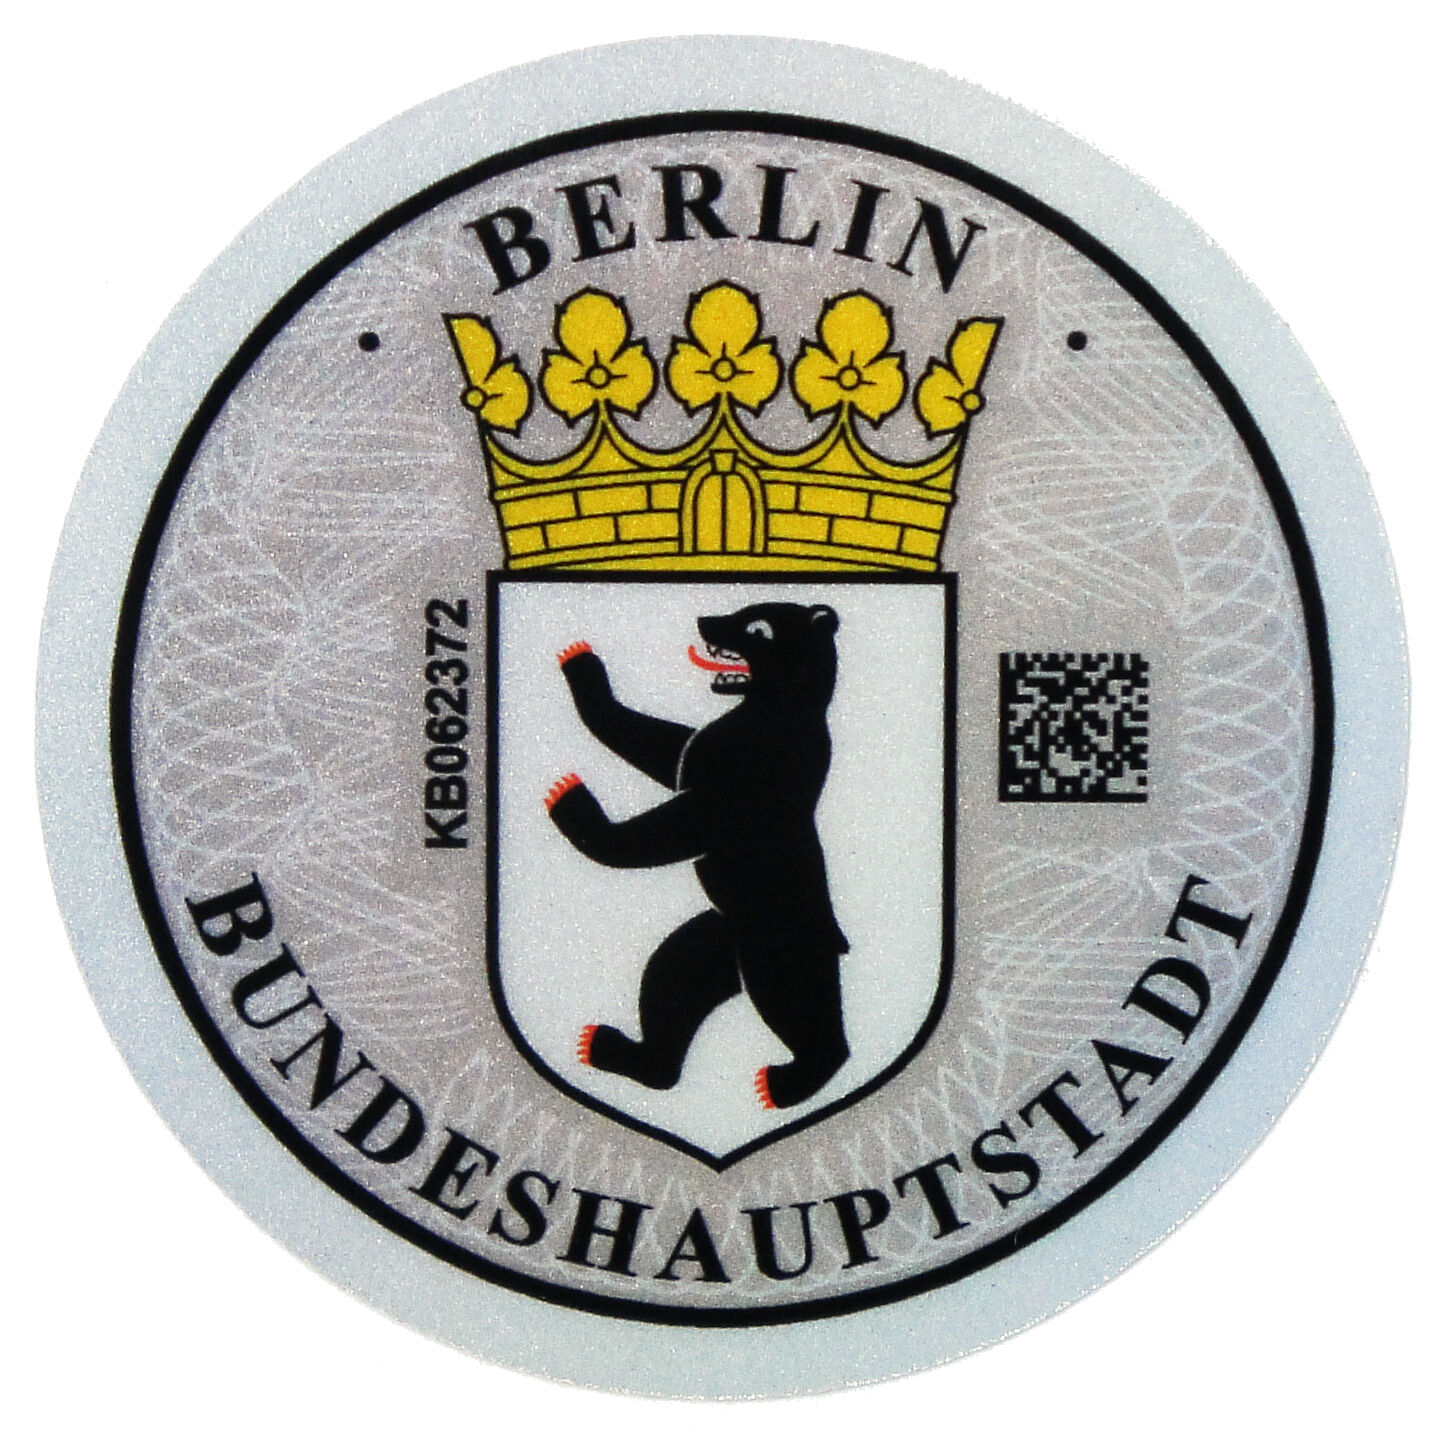 Berlin - German License Plate Registration Seal & Inspection Sticker Set